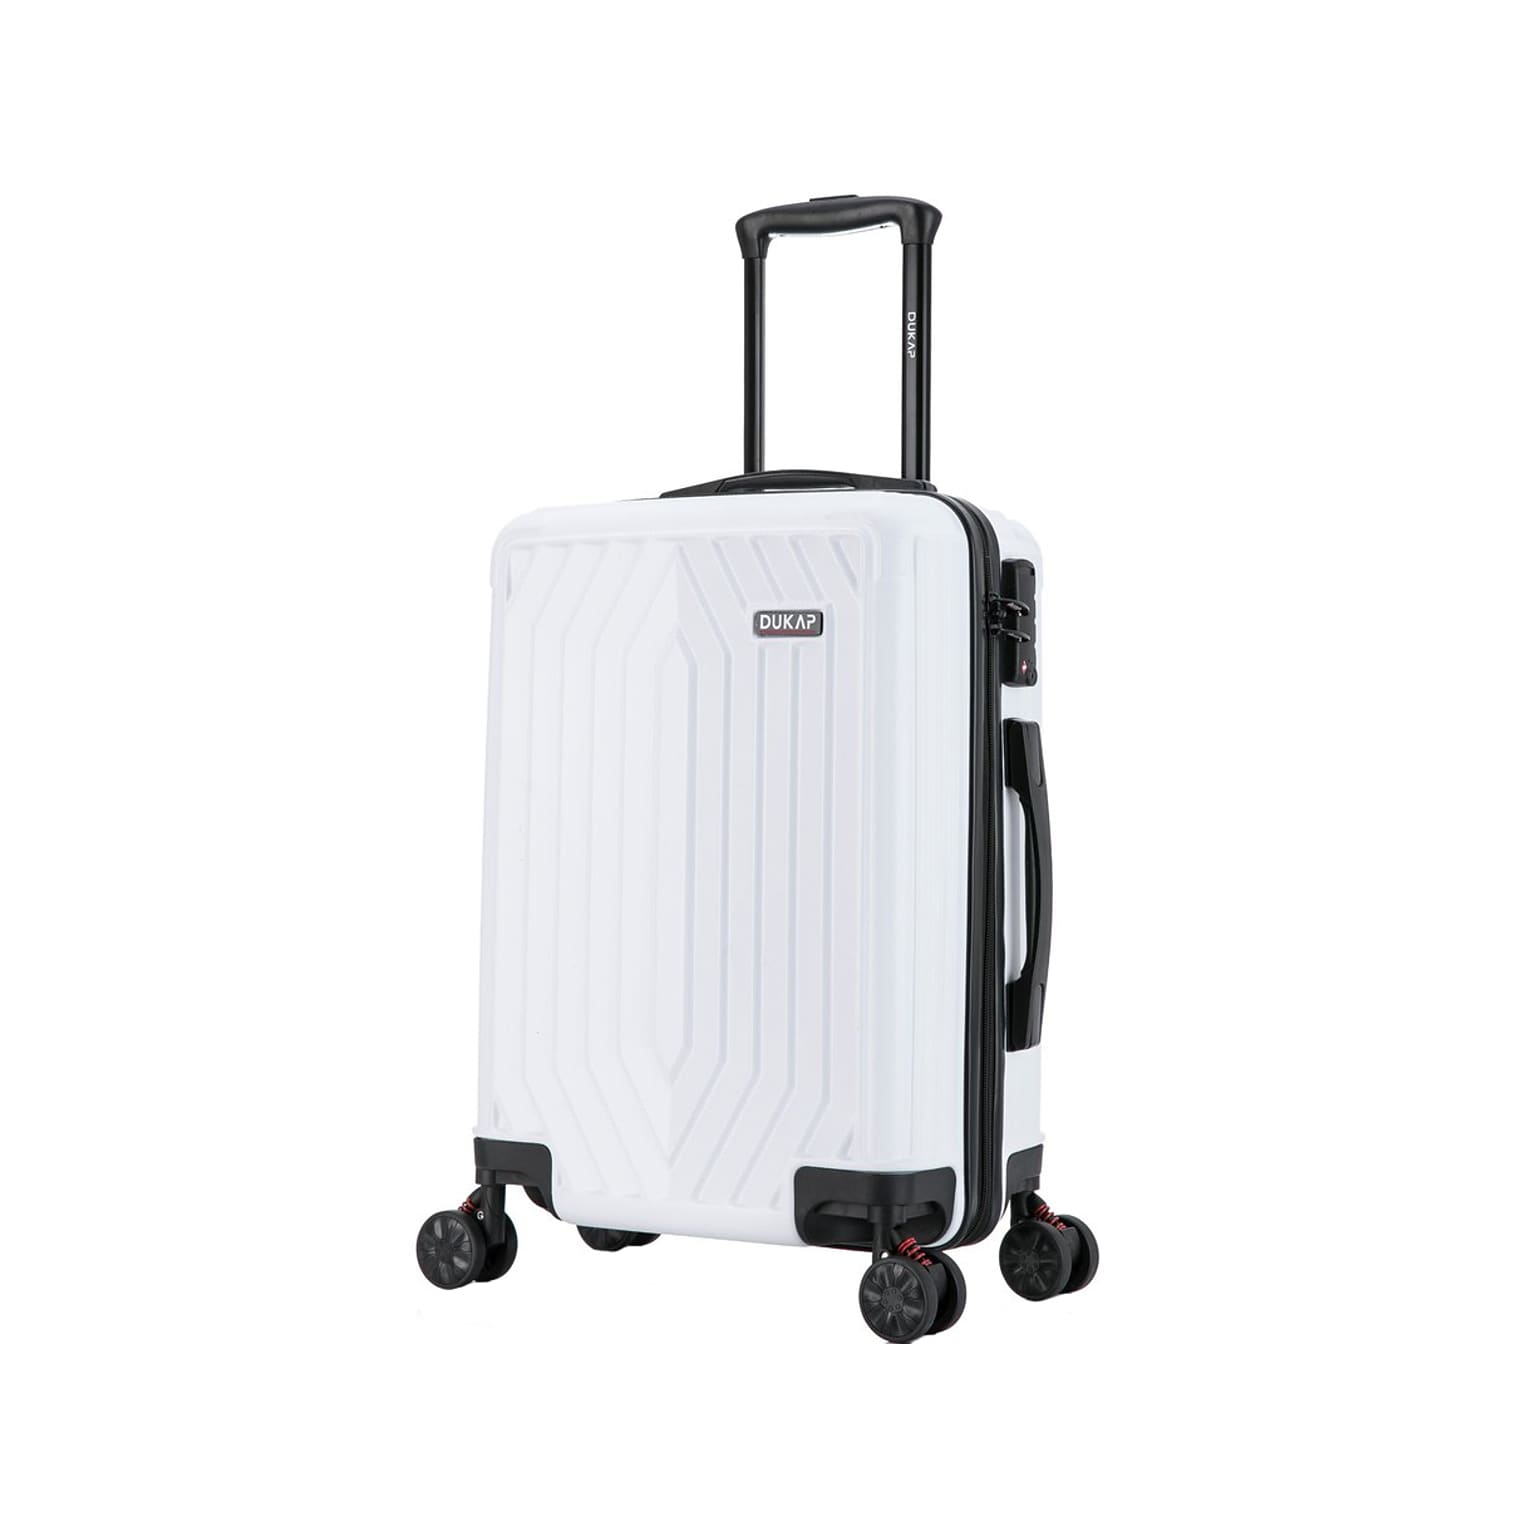 DUKAP STRATOS Plastic Carry-On Luggage, White (DKSTR00S-WHI)